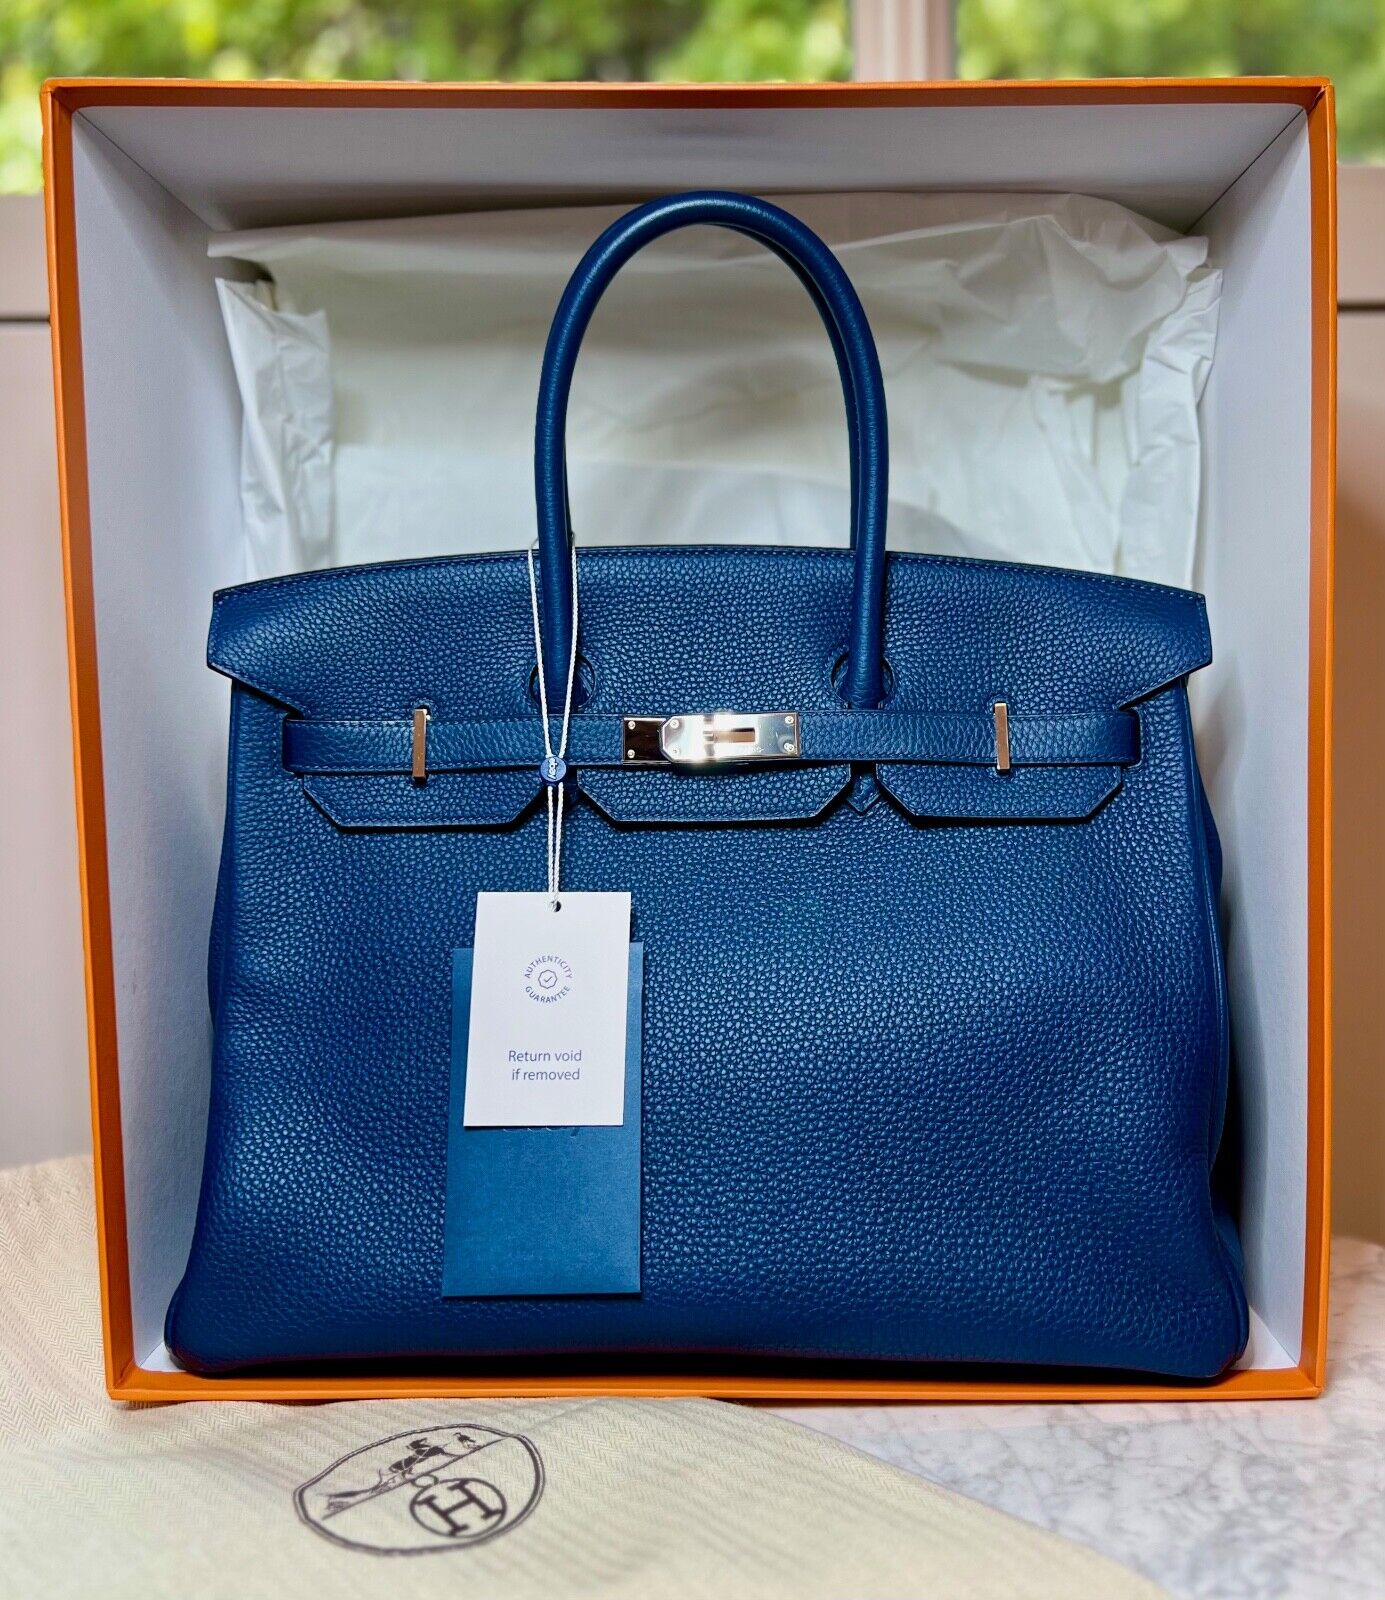 A blue hermes birkin bag